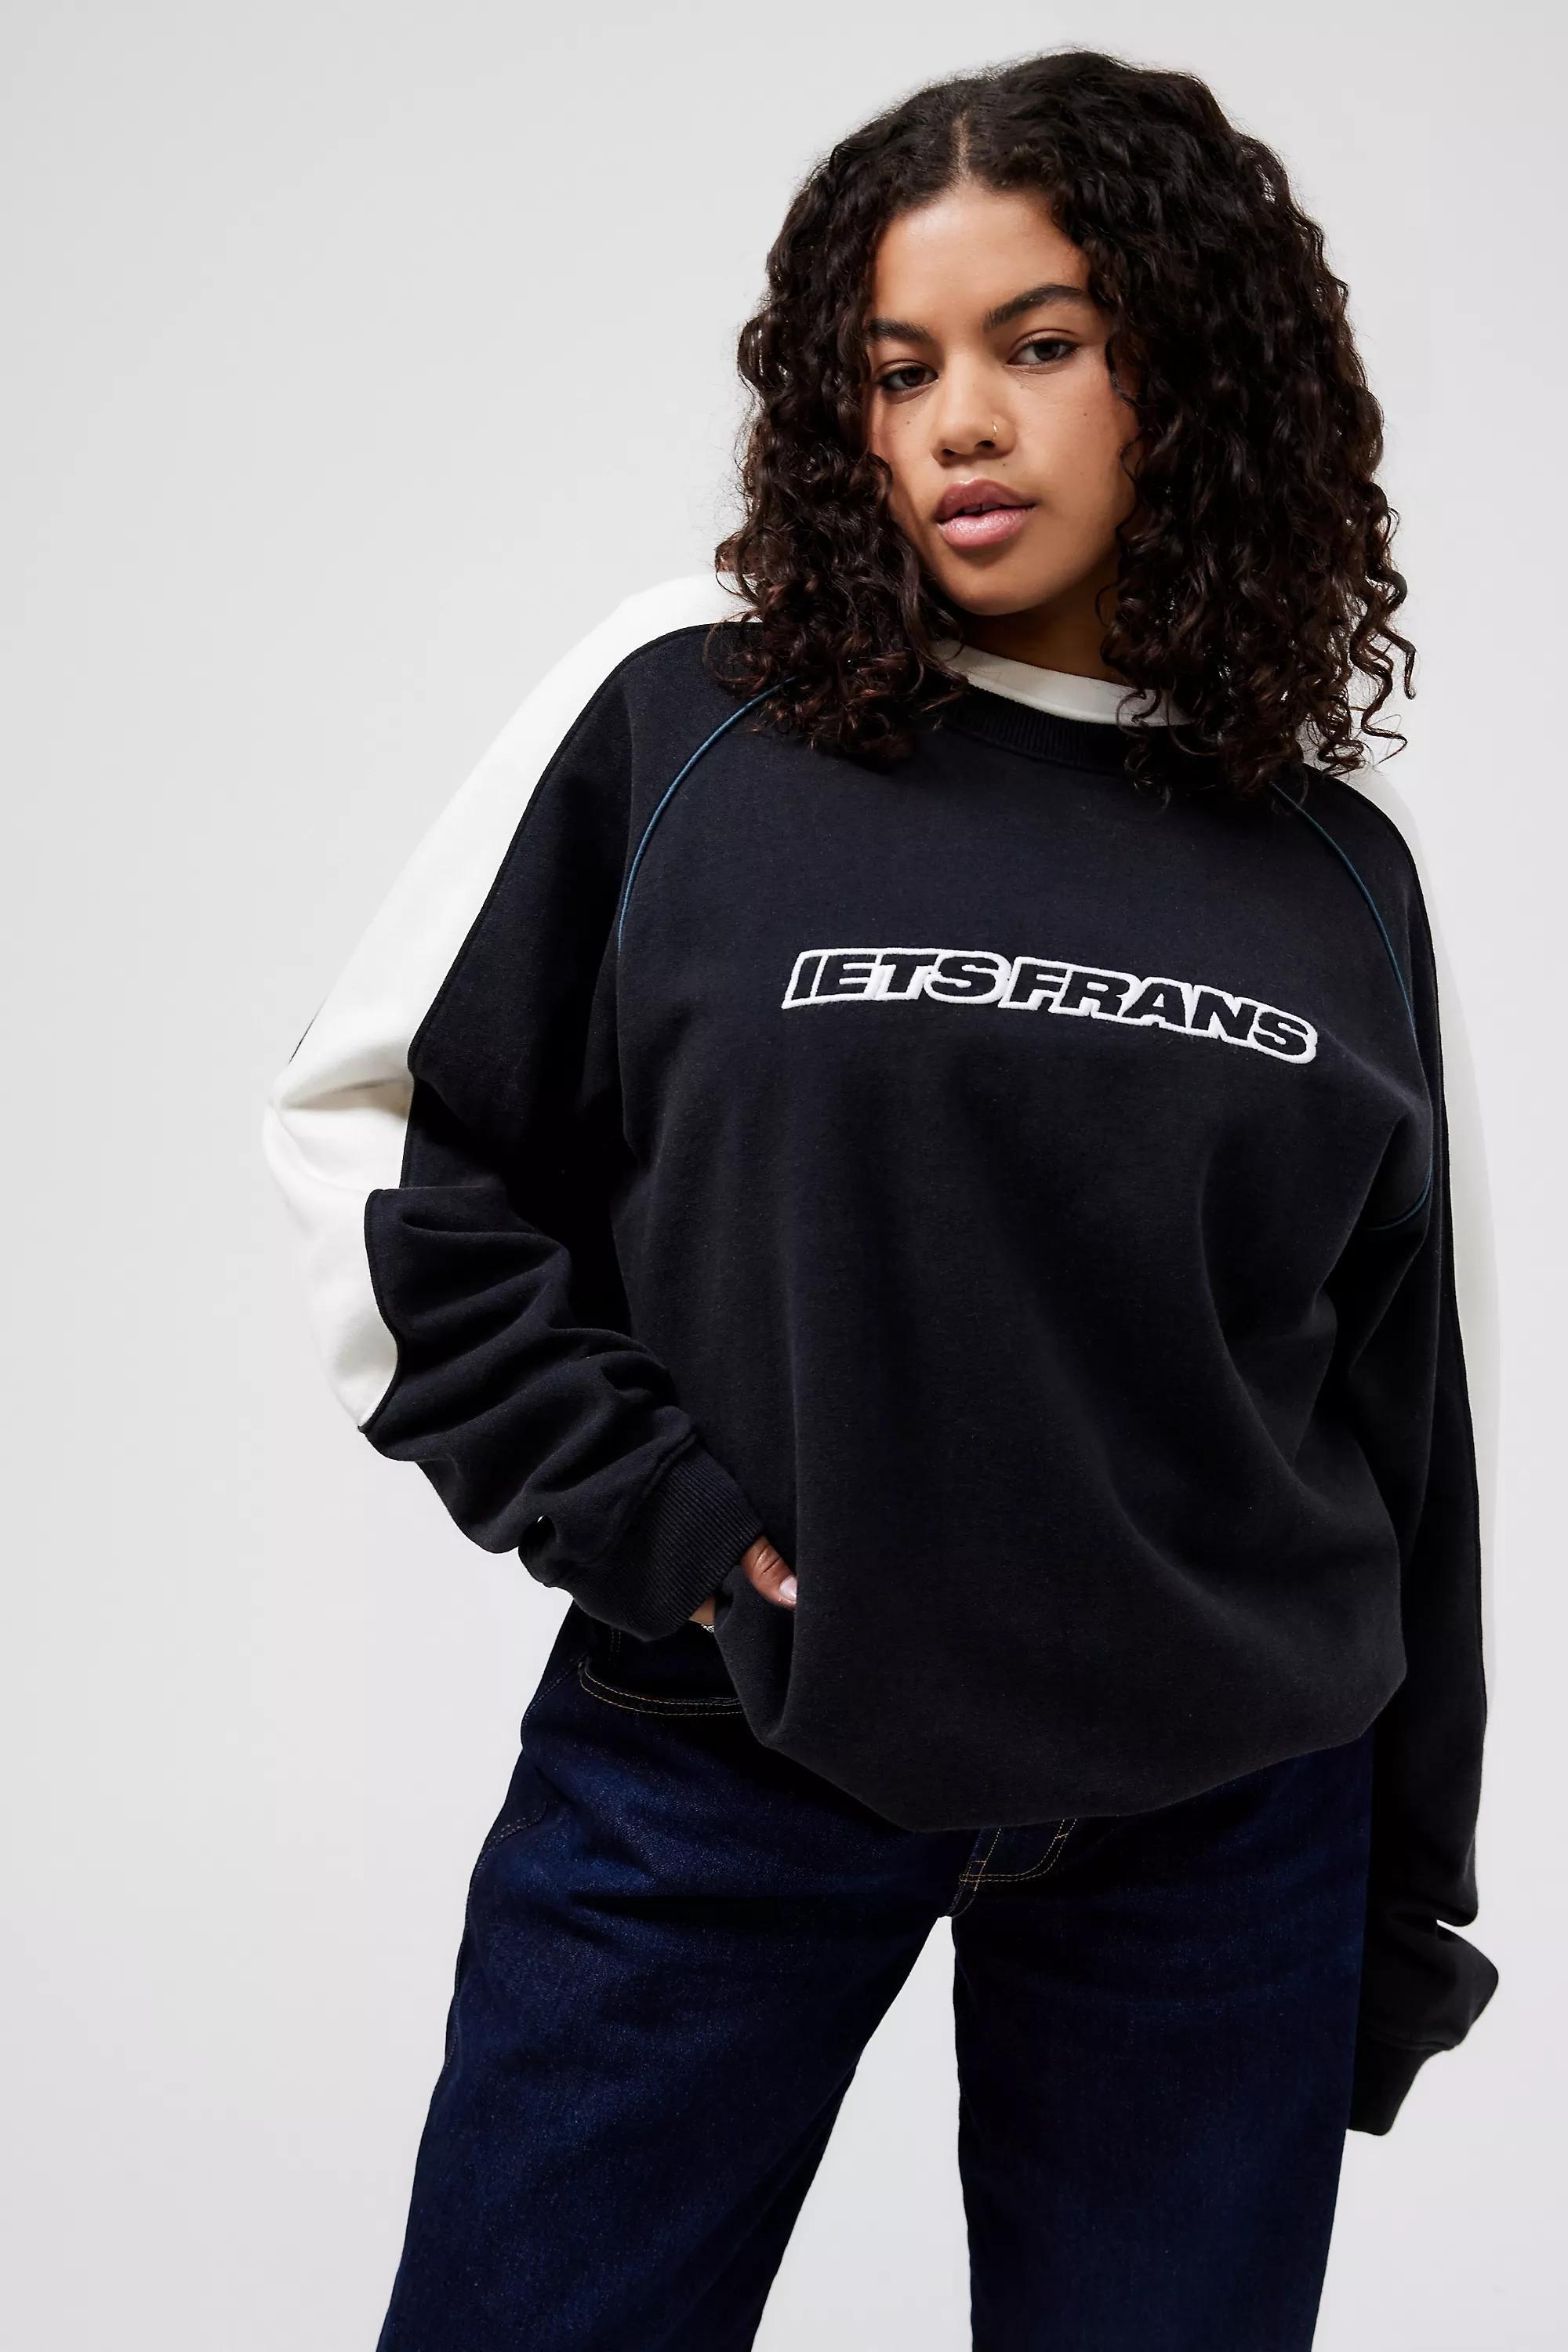 Urban Outfitters - Black Panel Sweatshirt